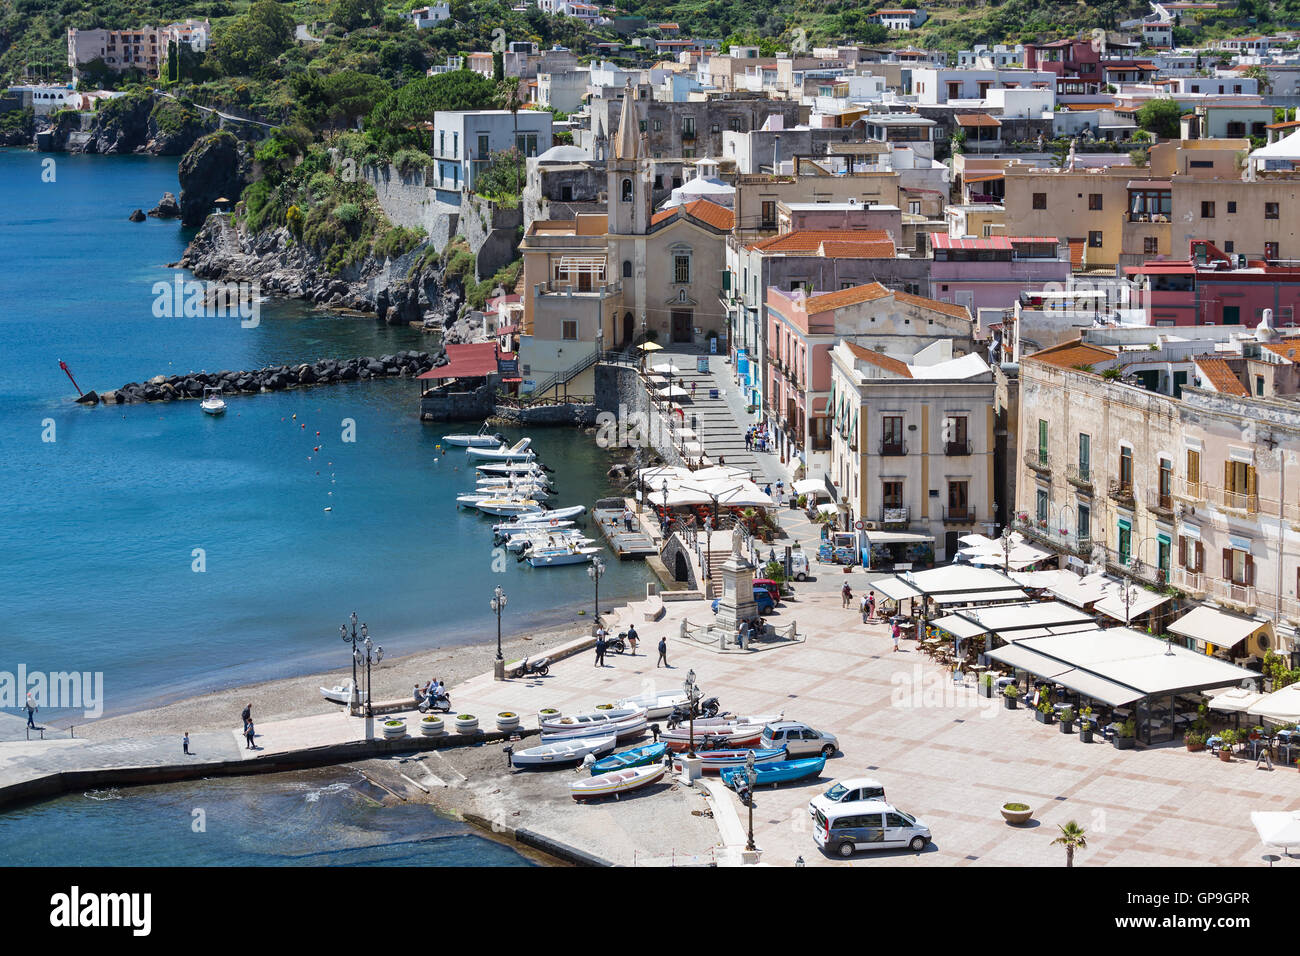 LIPARI, Italia - 24 de mayo: Vista aérea del puerto de Lipari en Mayo 24, 2016 en Islas Eolias cerca de Sicilia, Italia Foto de stock